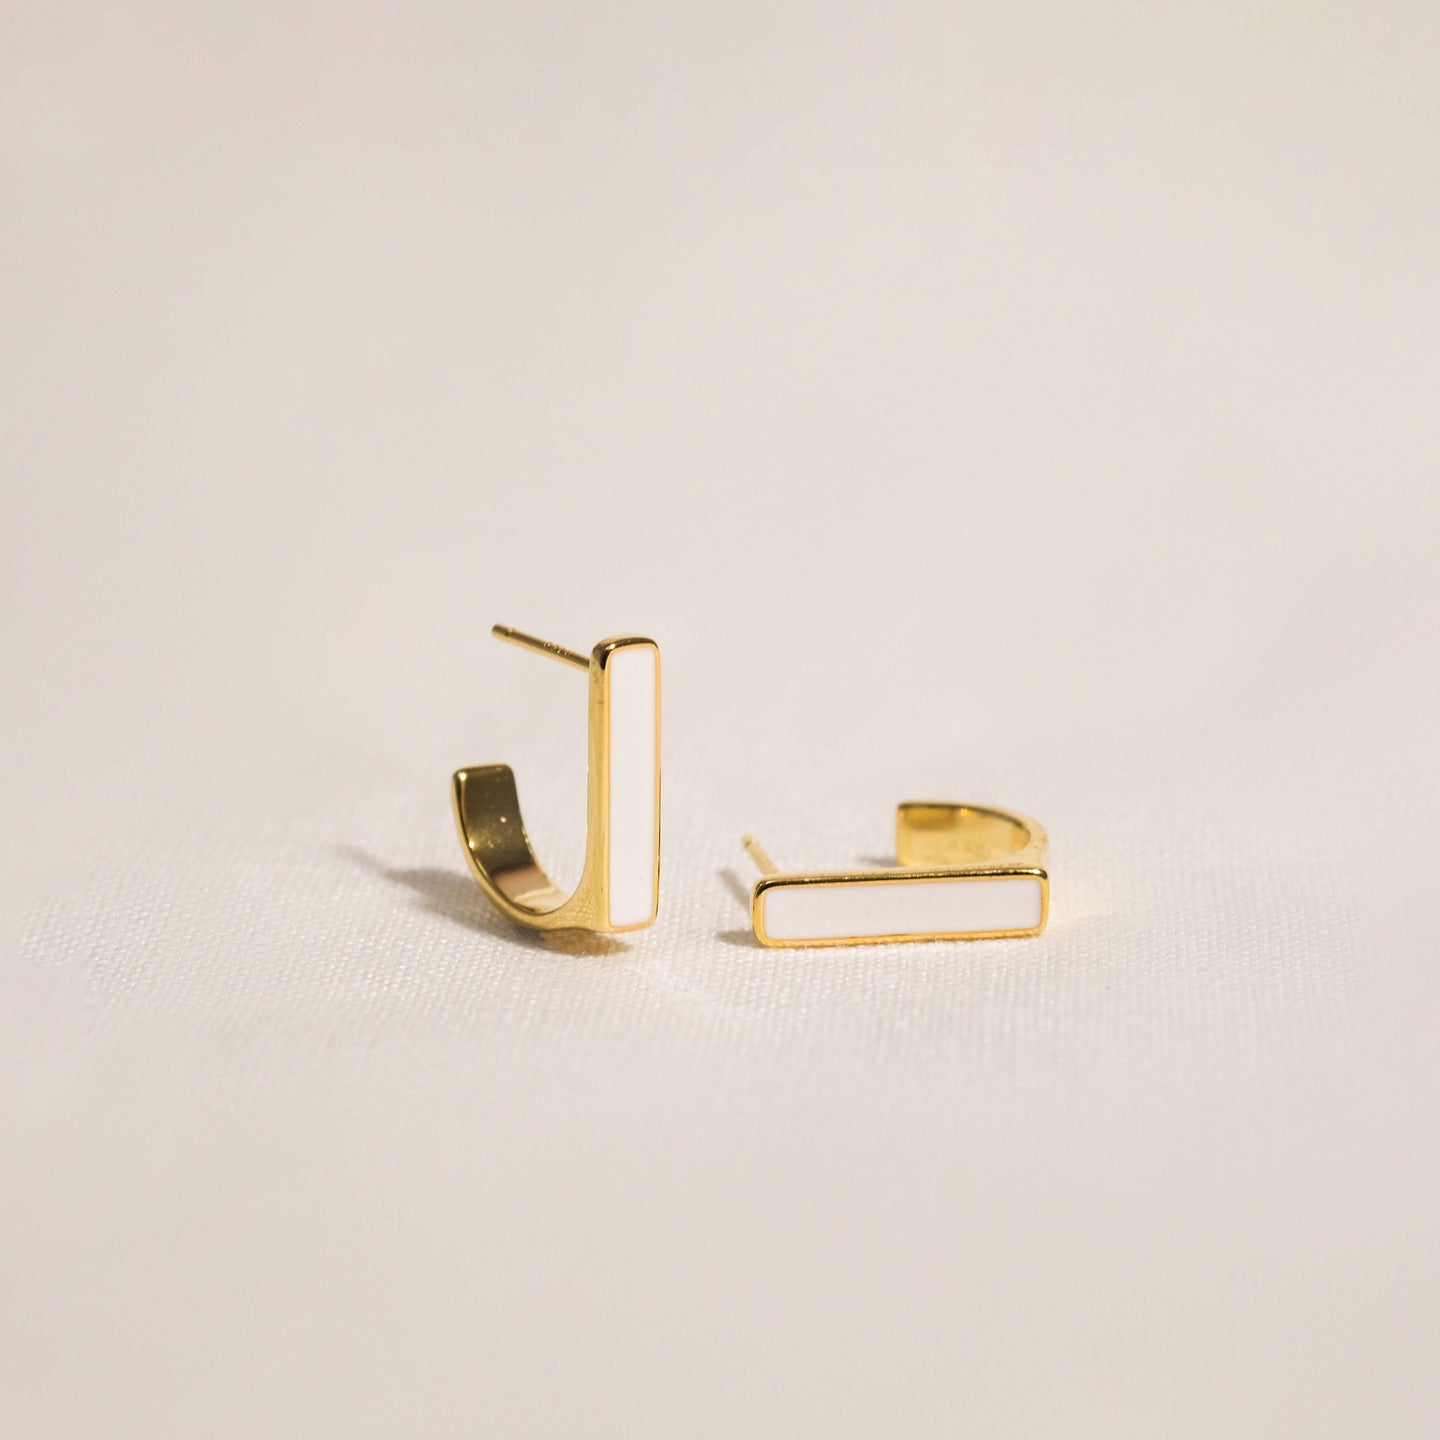 products/gan-enamel-earrings-18k-gold-vermeil-1.jpg